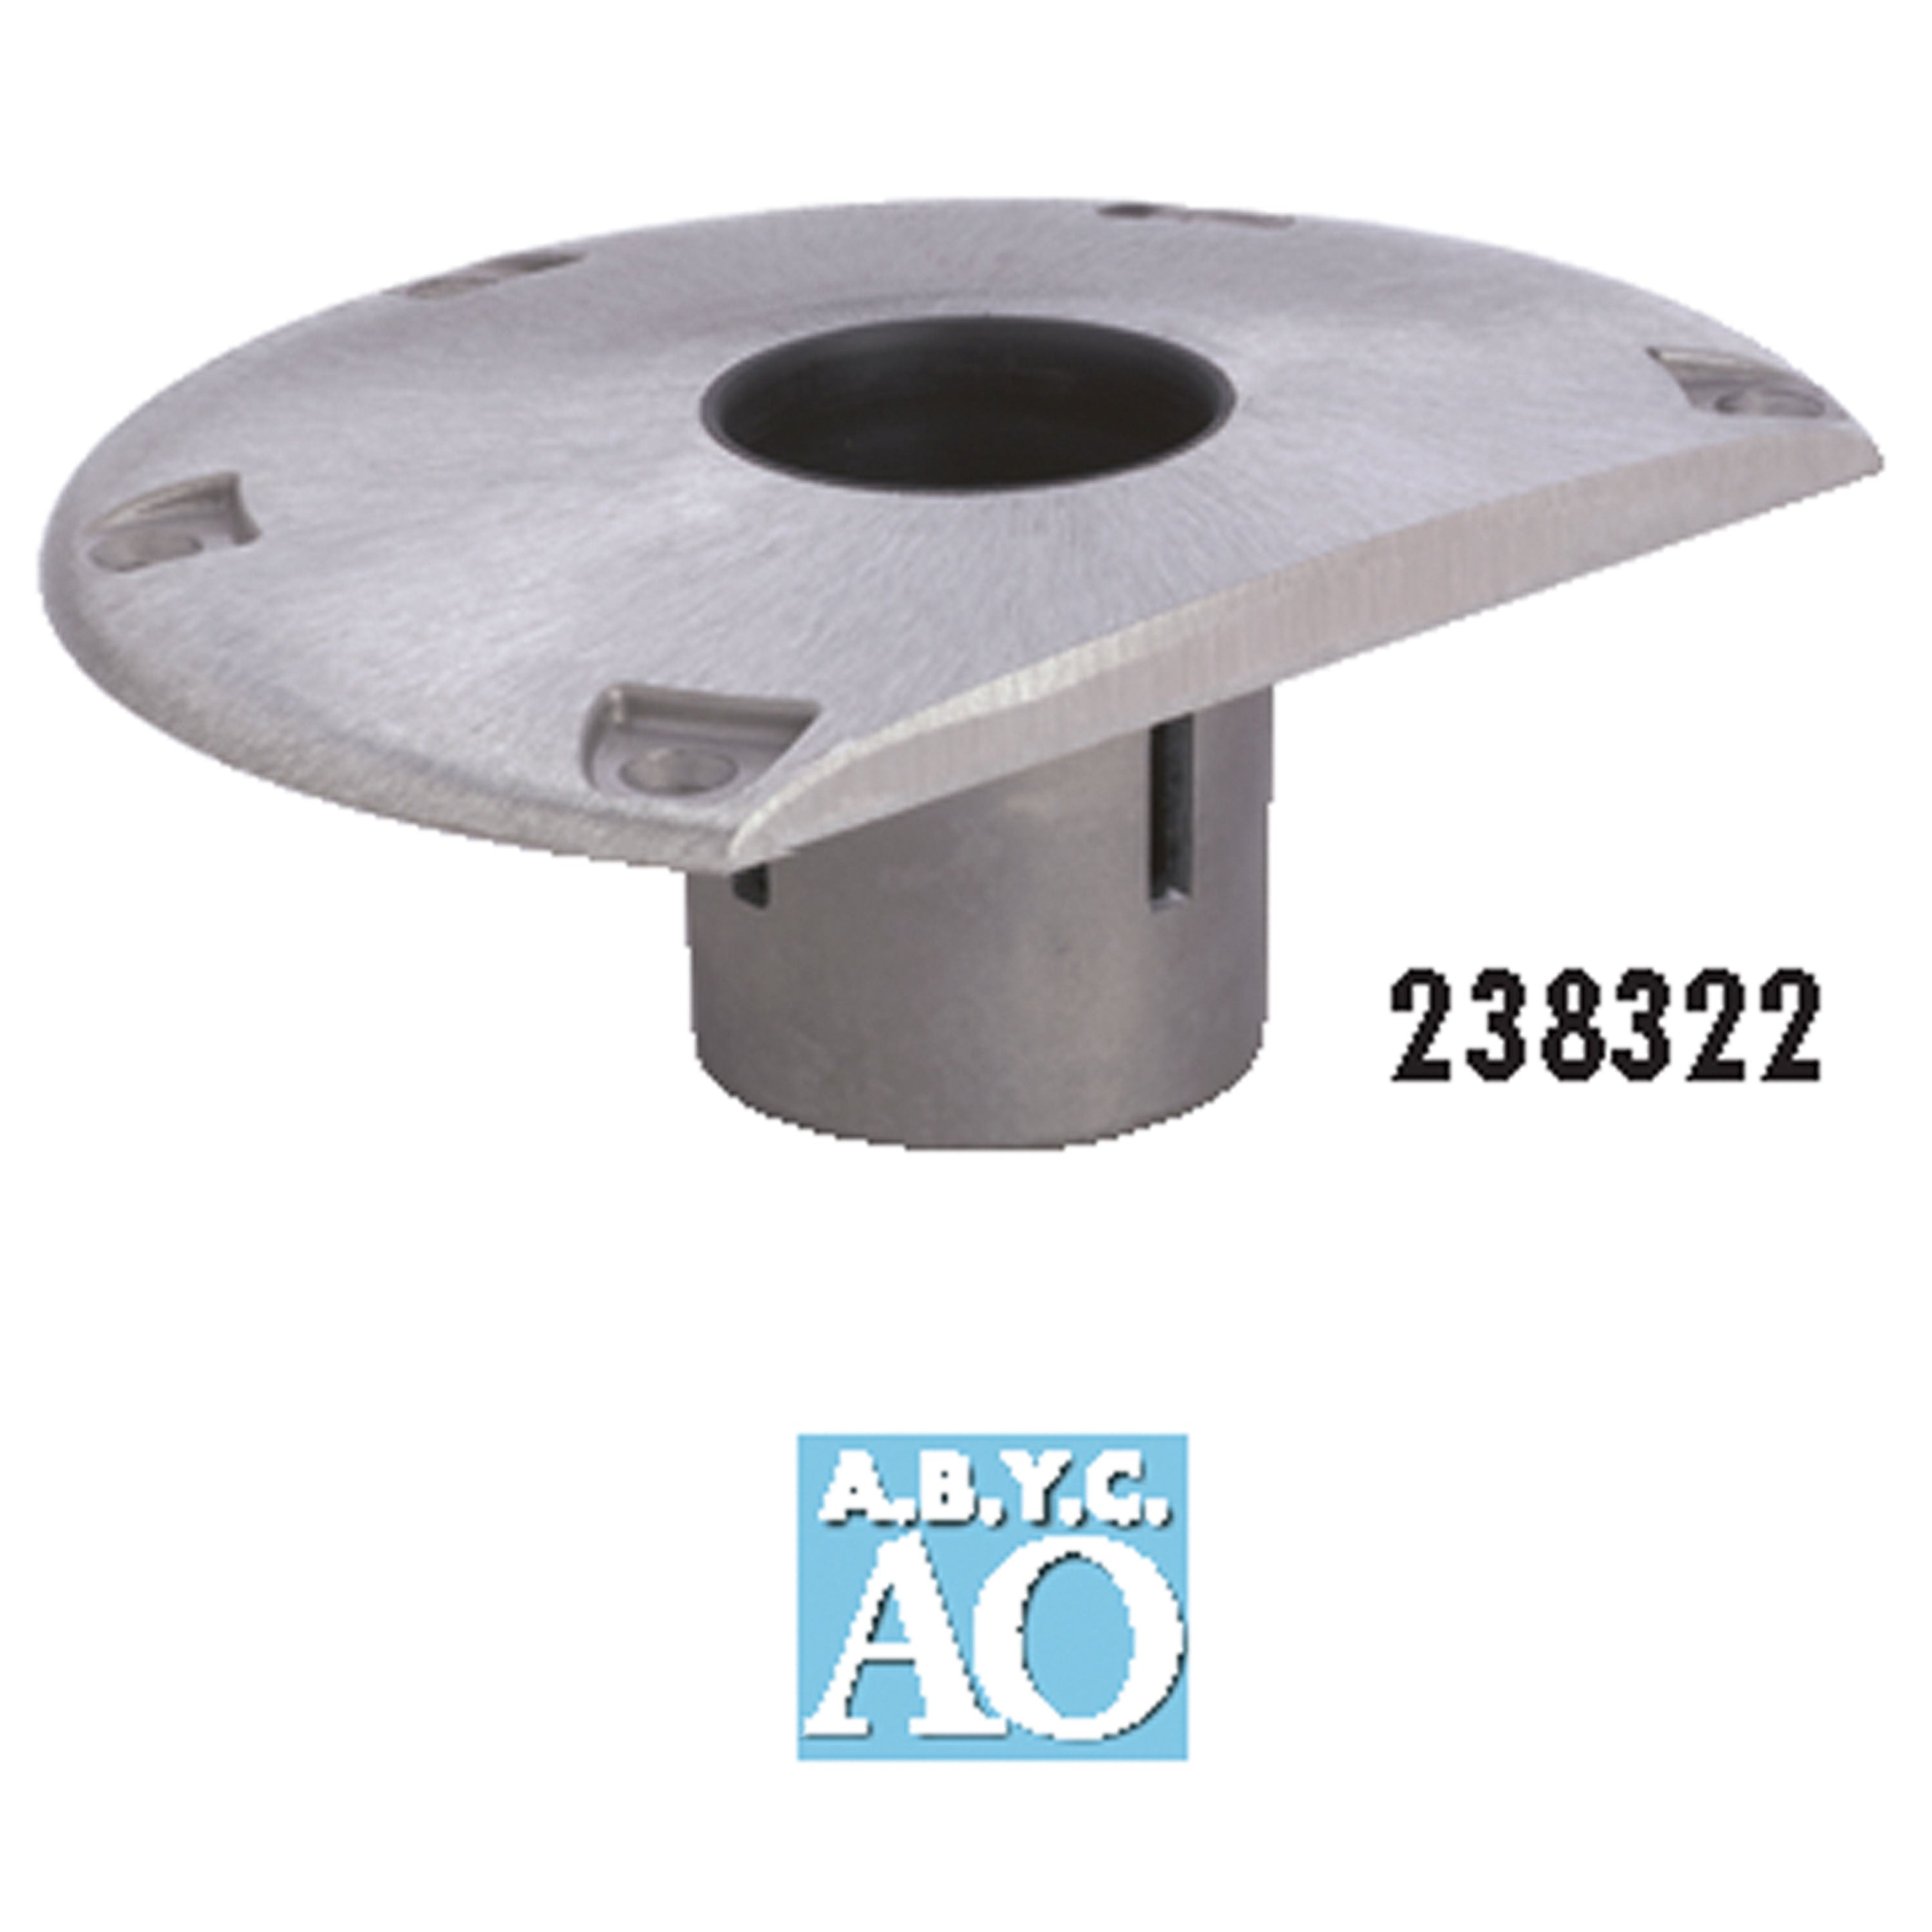 Attwood 238322-1 238 Series Socket Base - Aluminum, 9" D-Shaped